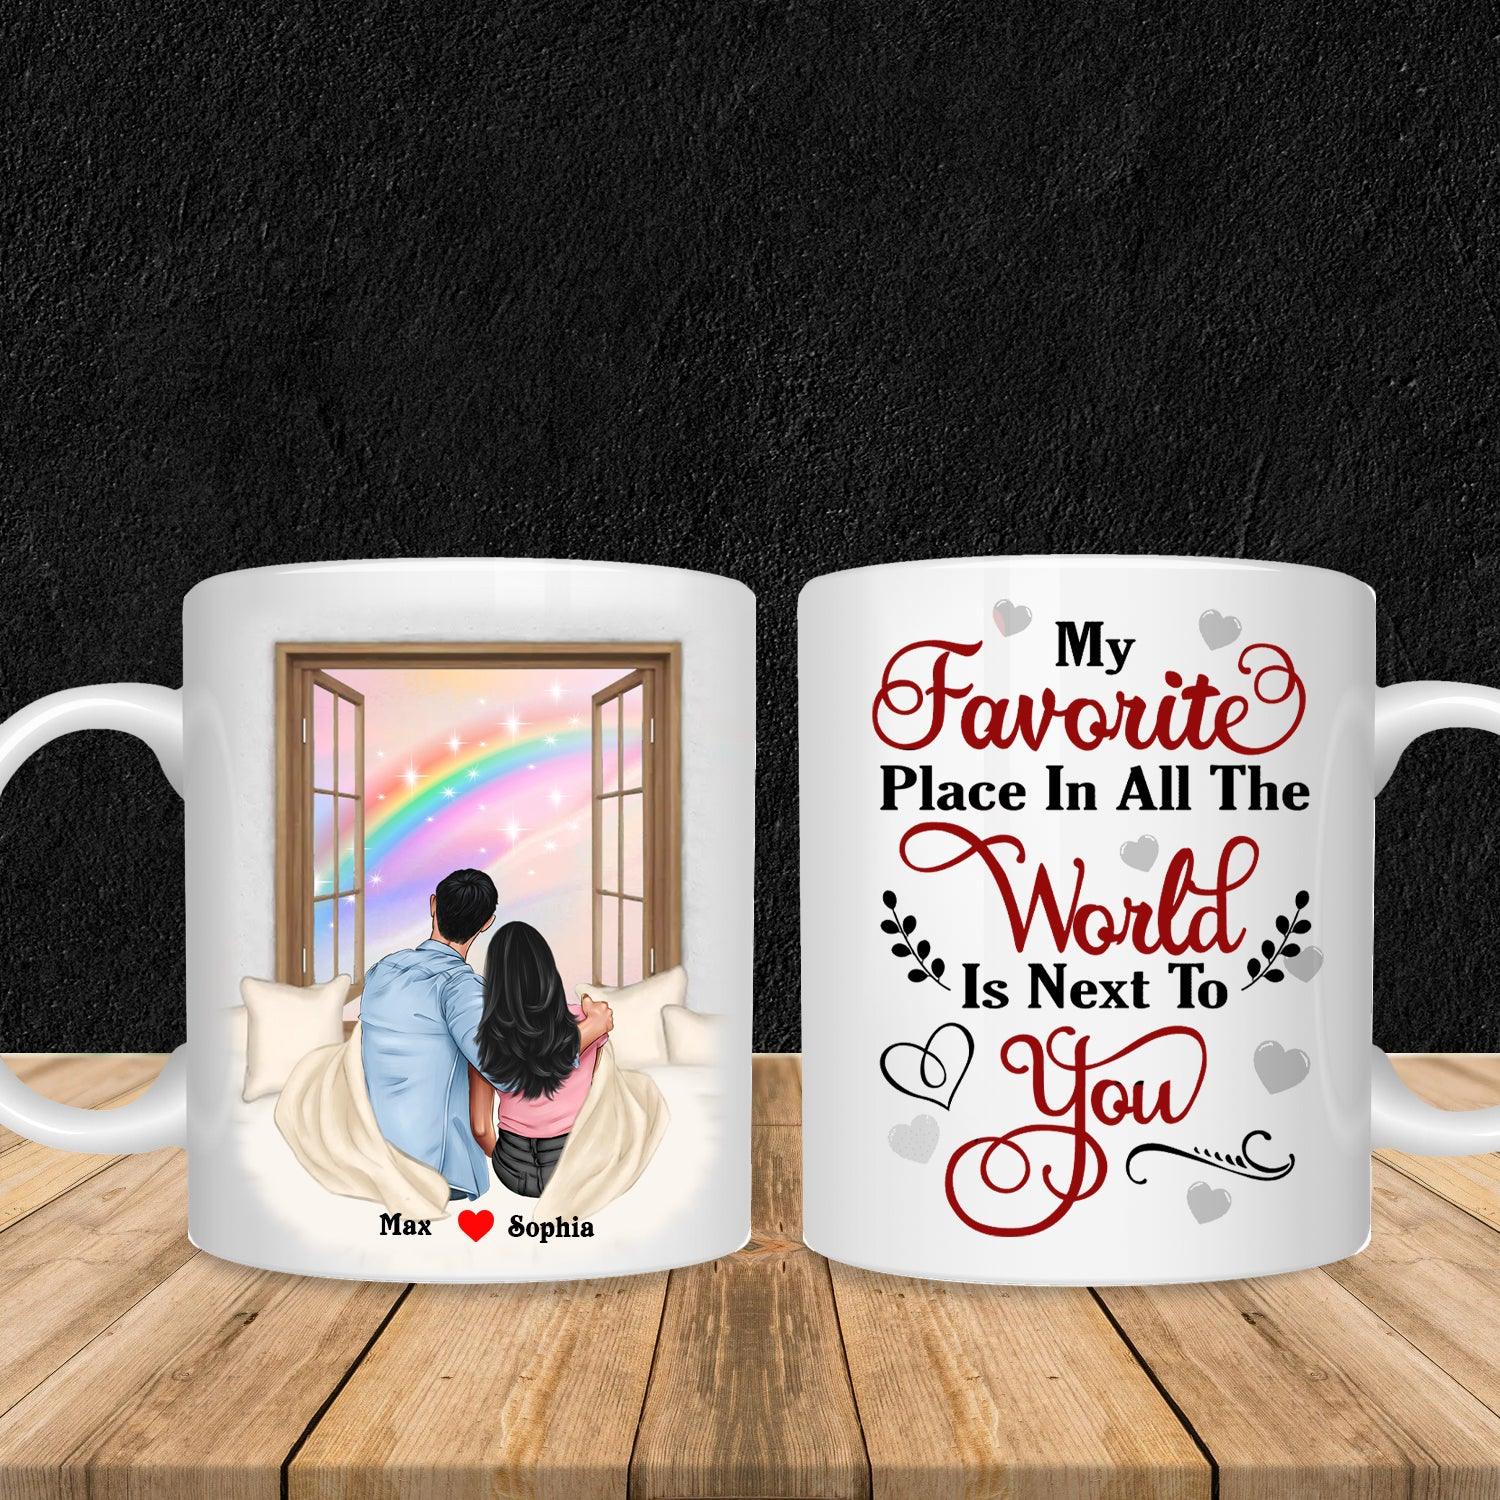 Buy Best Couple Personalised Mug Gift Online at ₹349